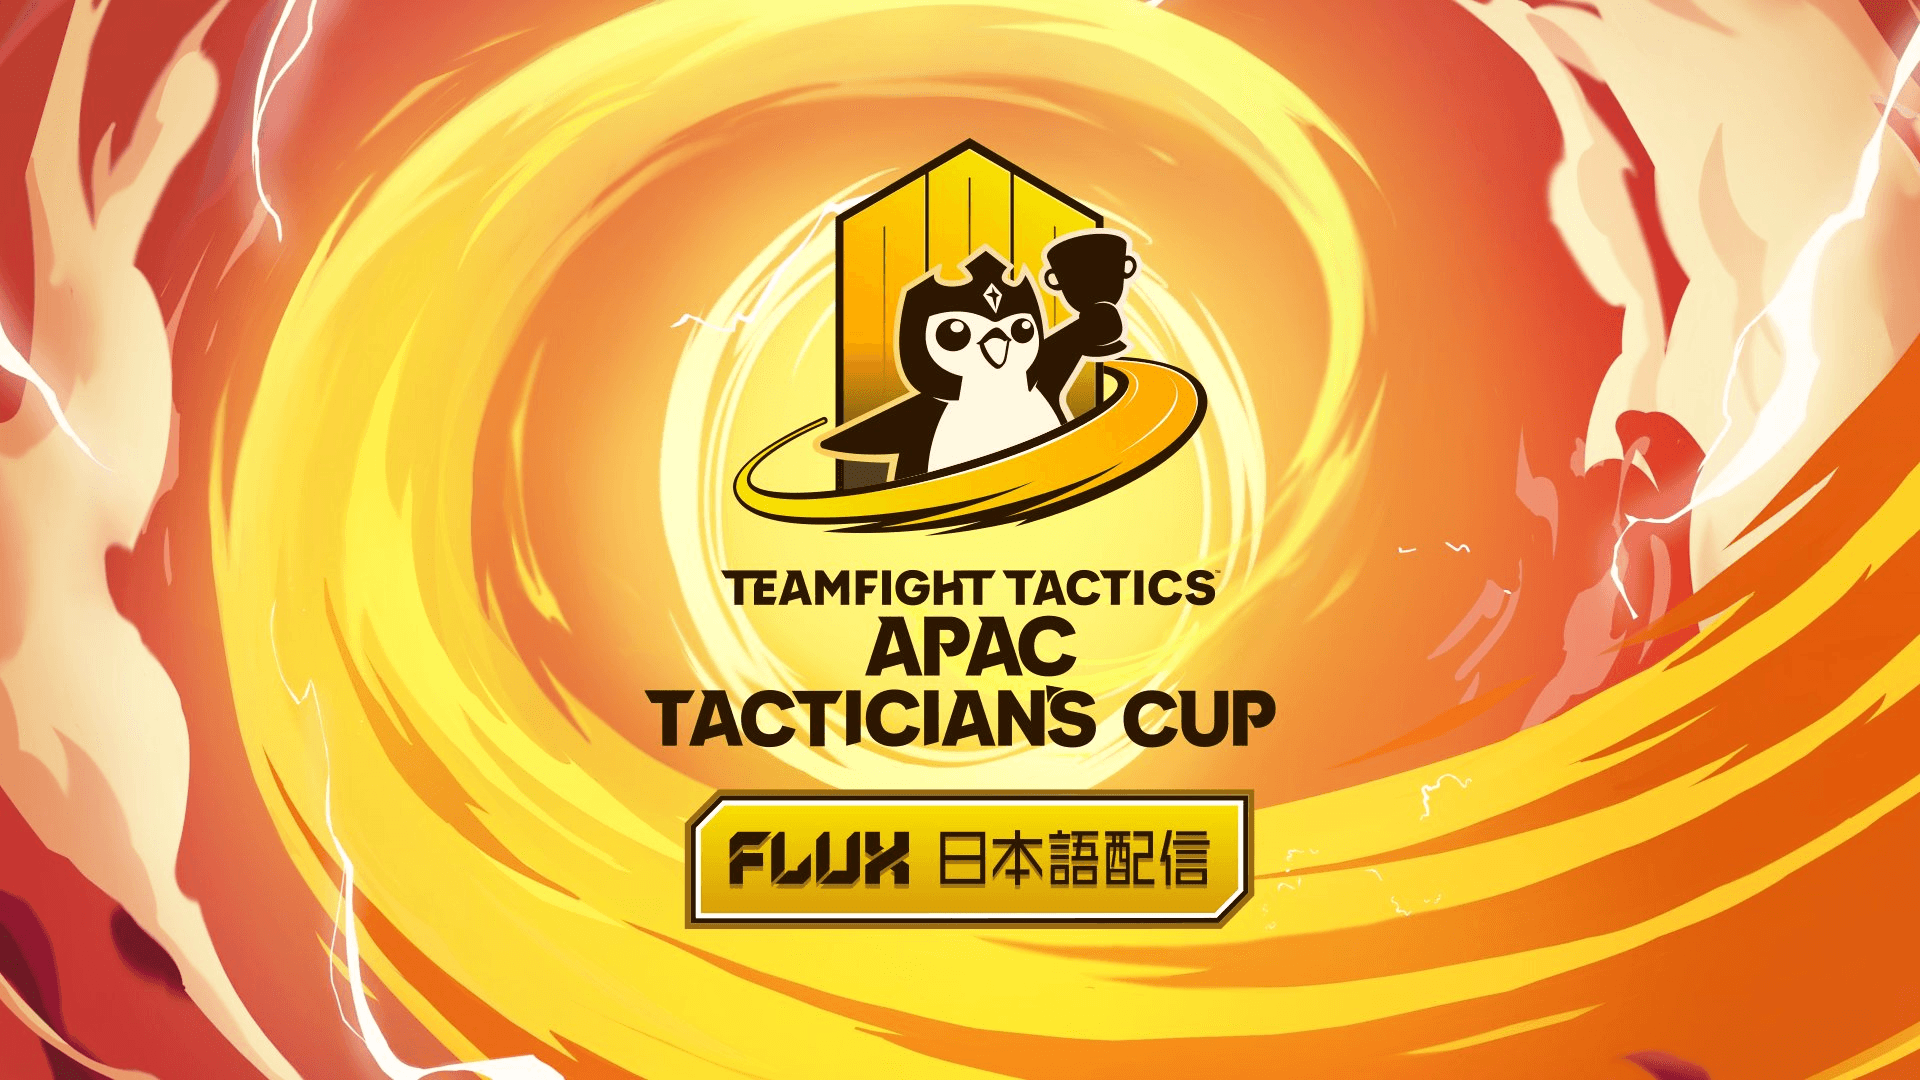 Teamfight Tactics APAC Tactician’s Cup I FLUX日本語配信の見出し画像